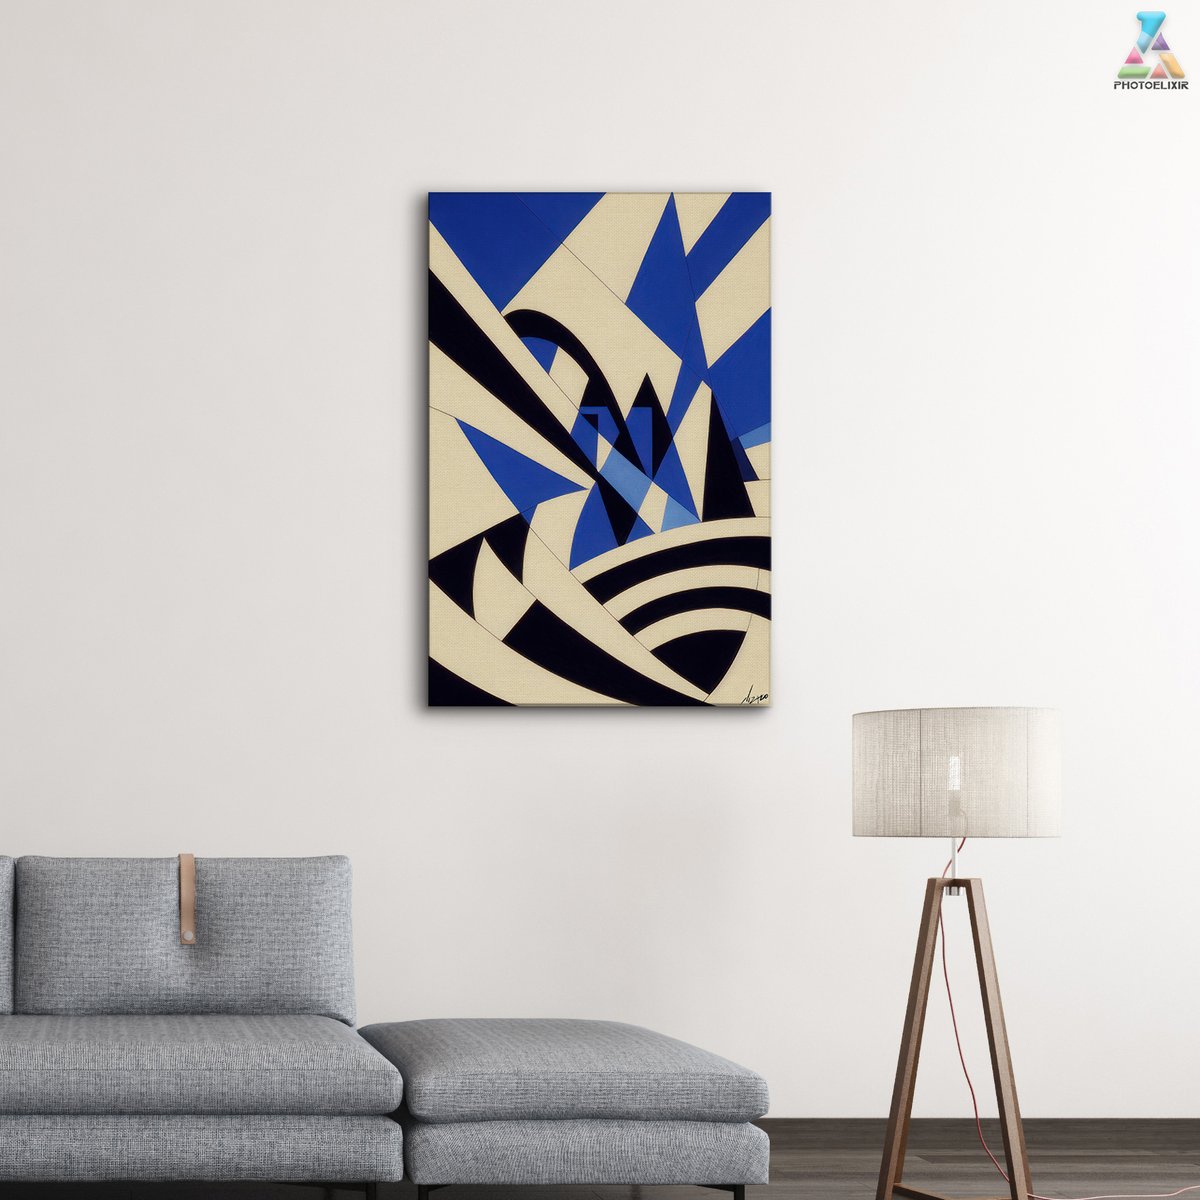 Wall art by Photoelixir.com

'Rough Sea' by Nizako

Decorate your space with this beautiful artwork

#wallart #roughsea #interiordecor #nizako #ArtistOnTwitter #homedecor #interiordesign #officedecor #abstract #photoelixir #artoftheday #Canvas